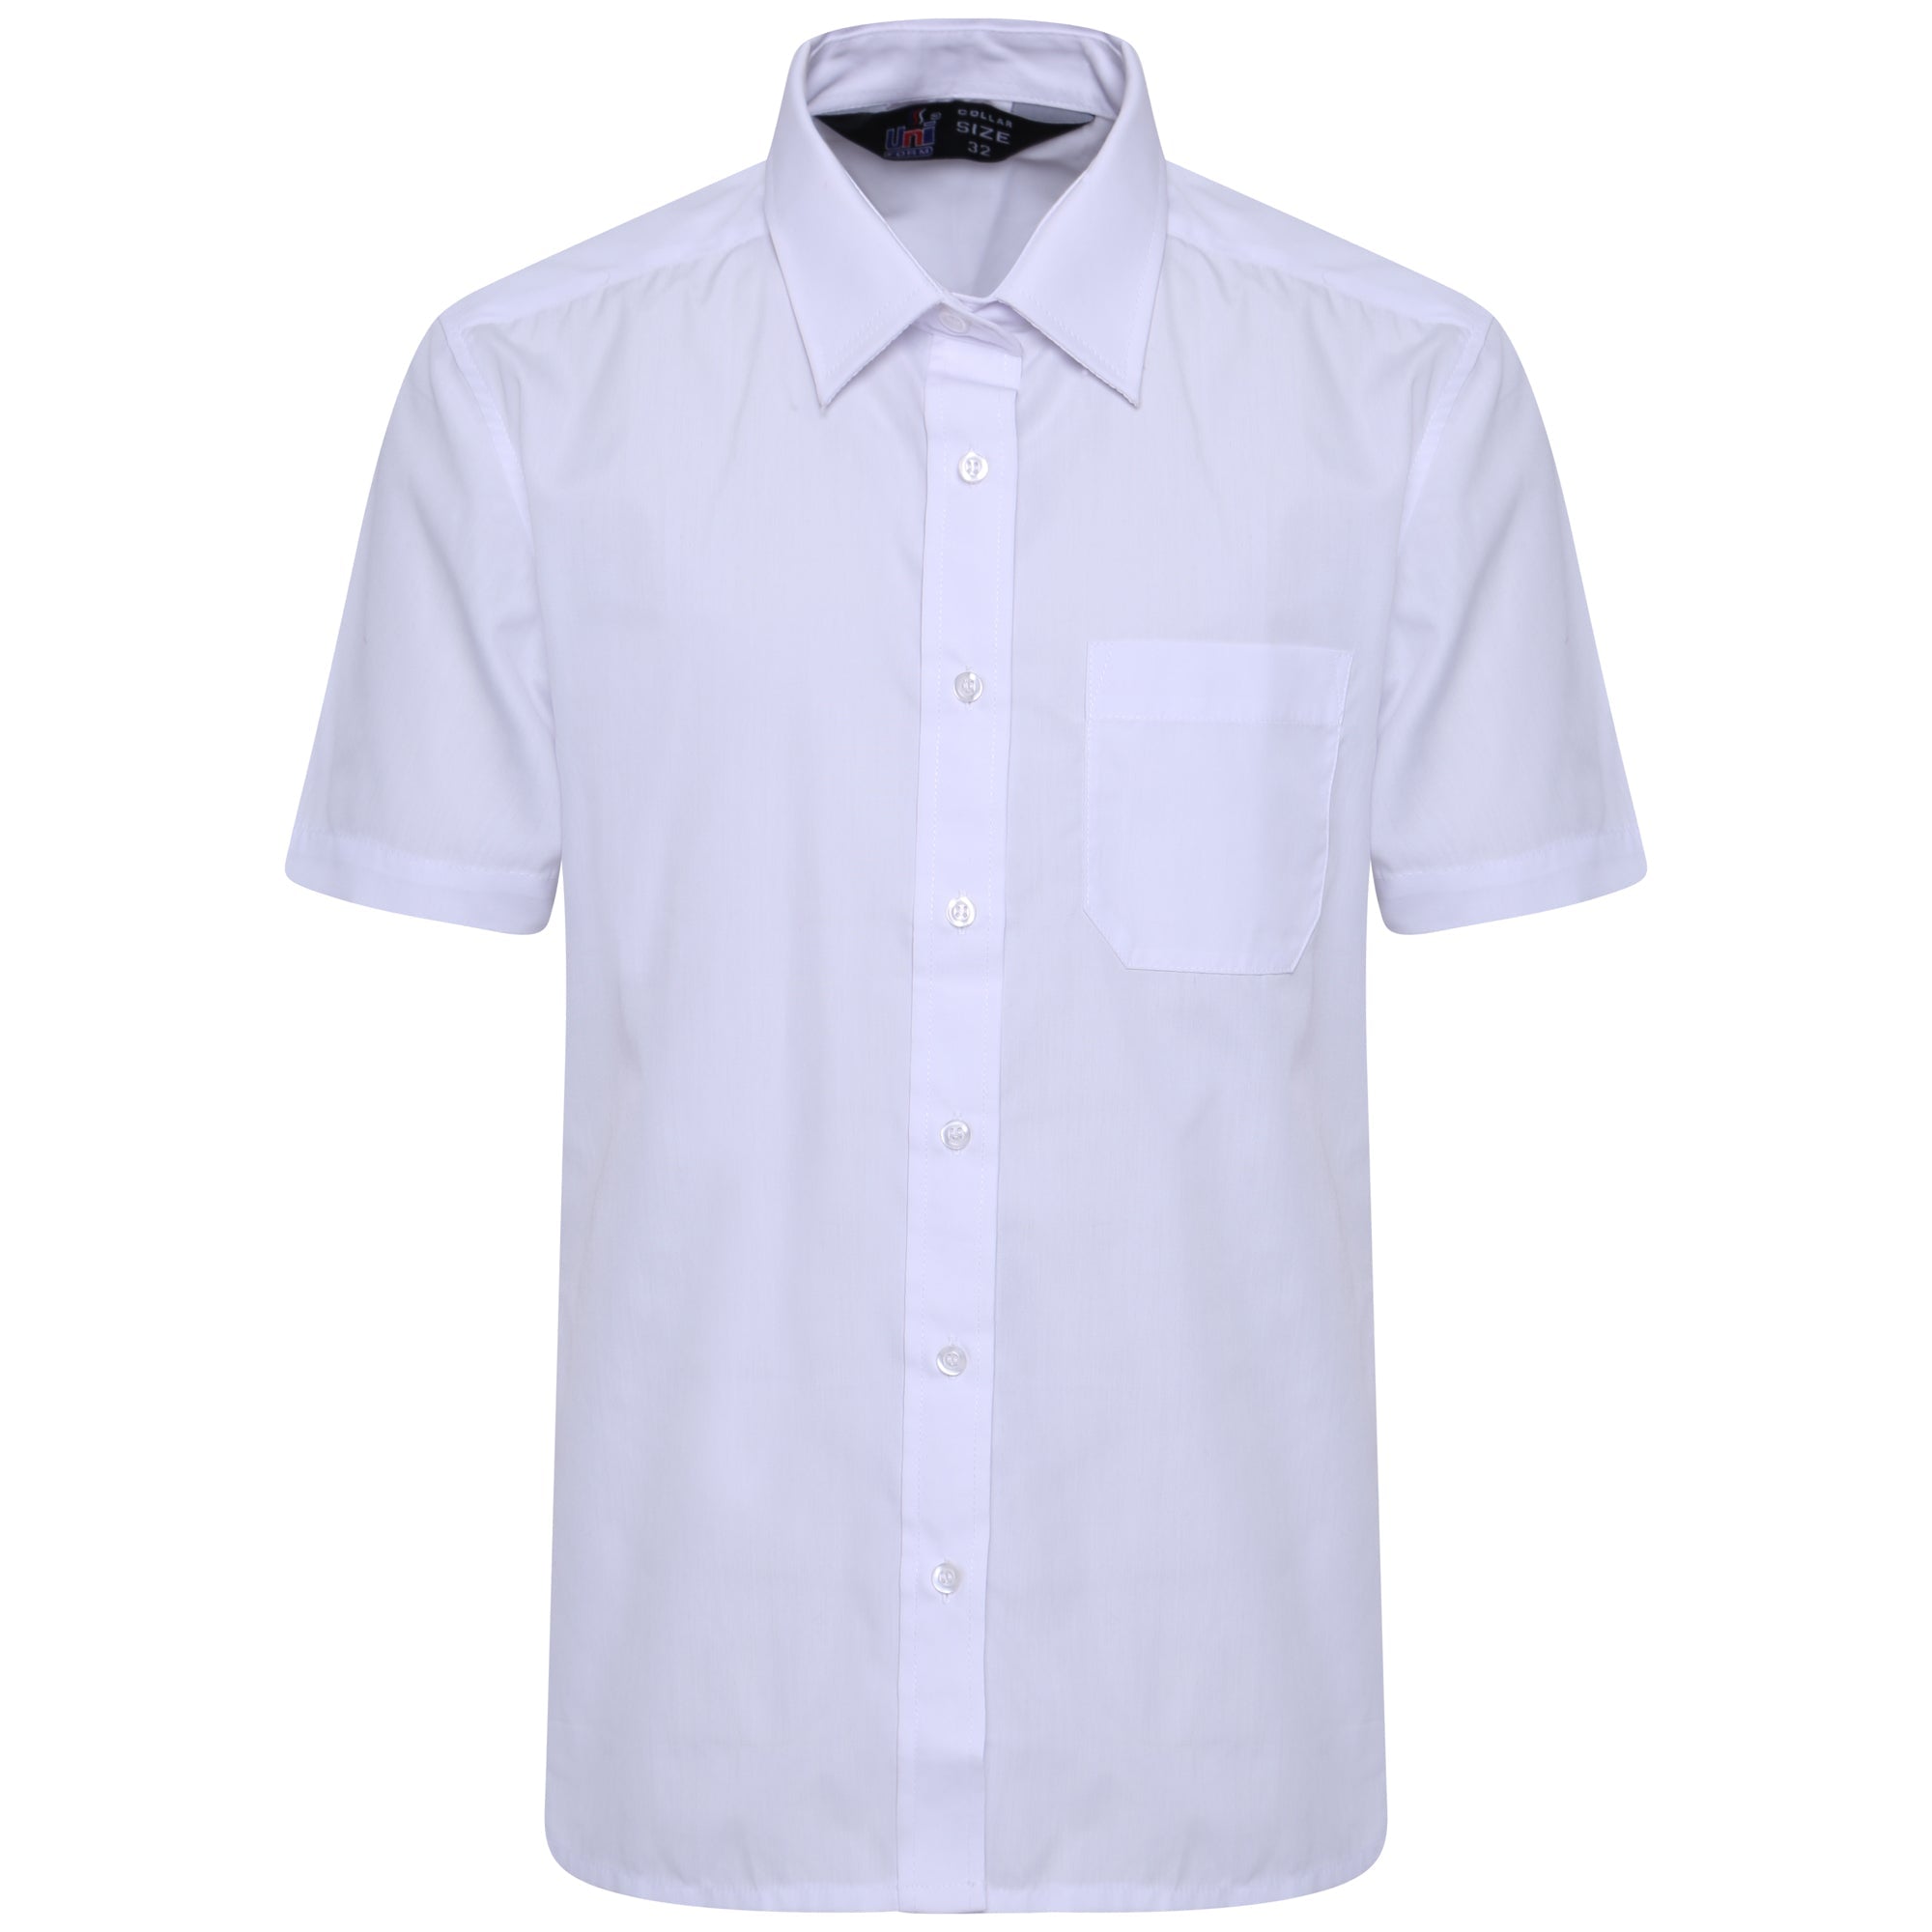 Kids Girls School Uniform Blouse Shirt Short Sleeve Poly Cotton Fabric White Machine Washable